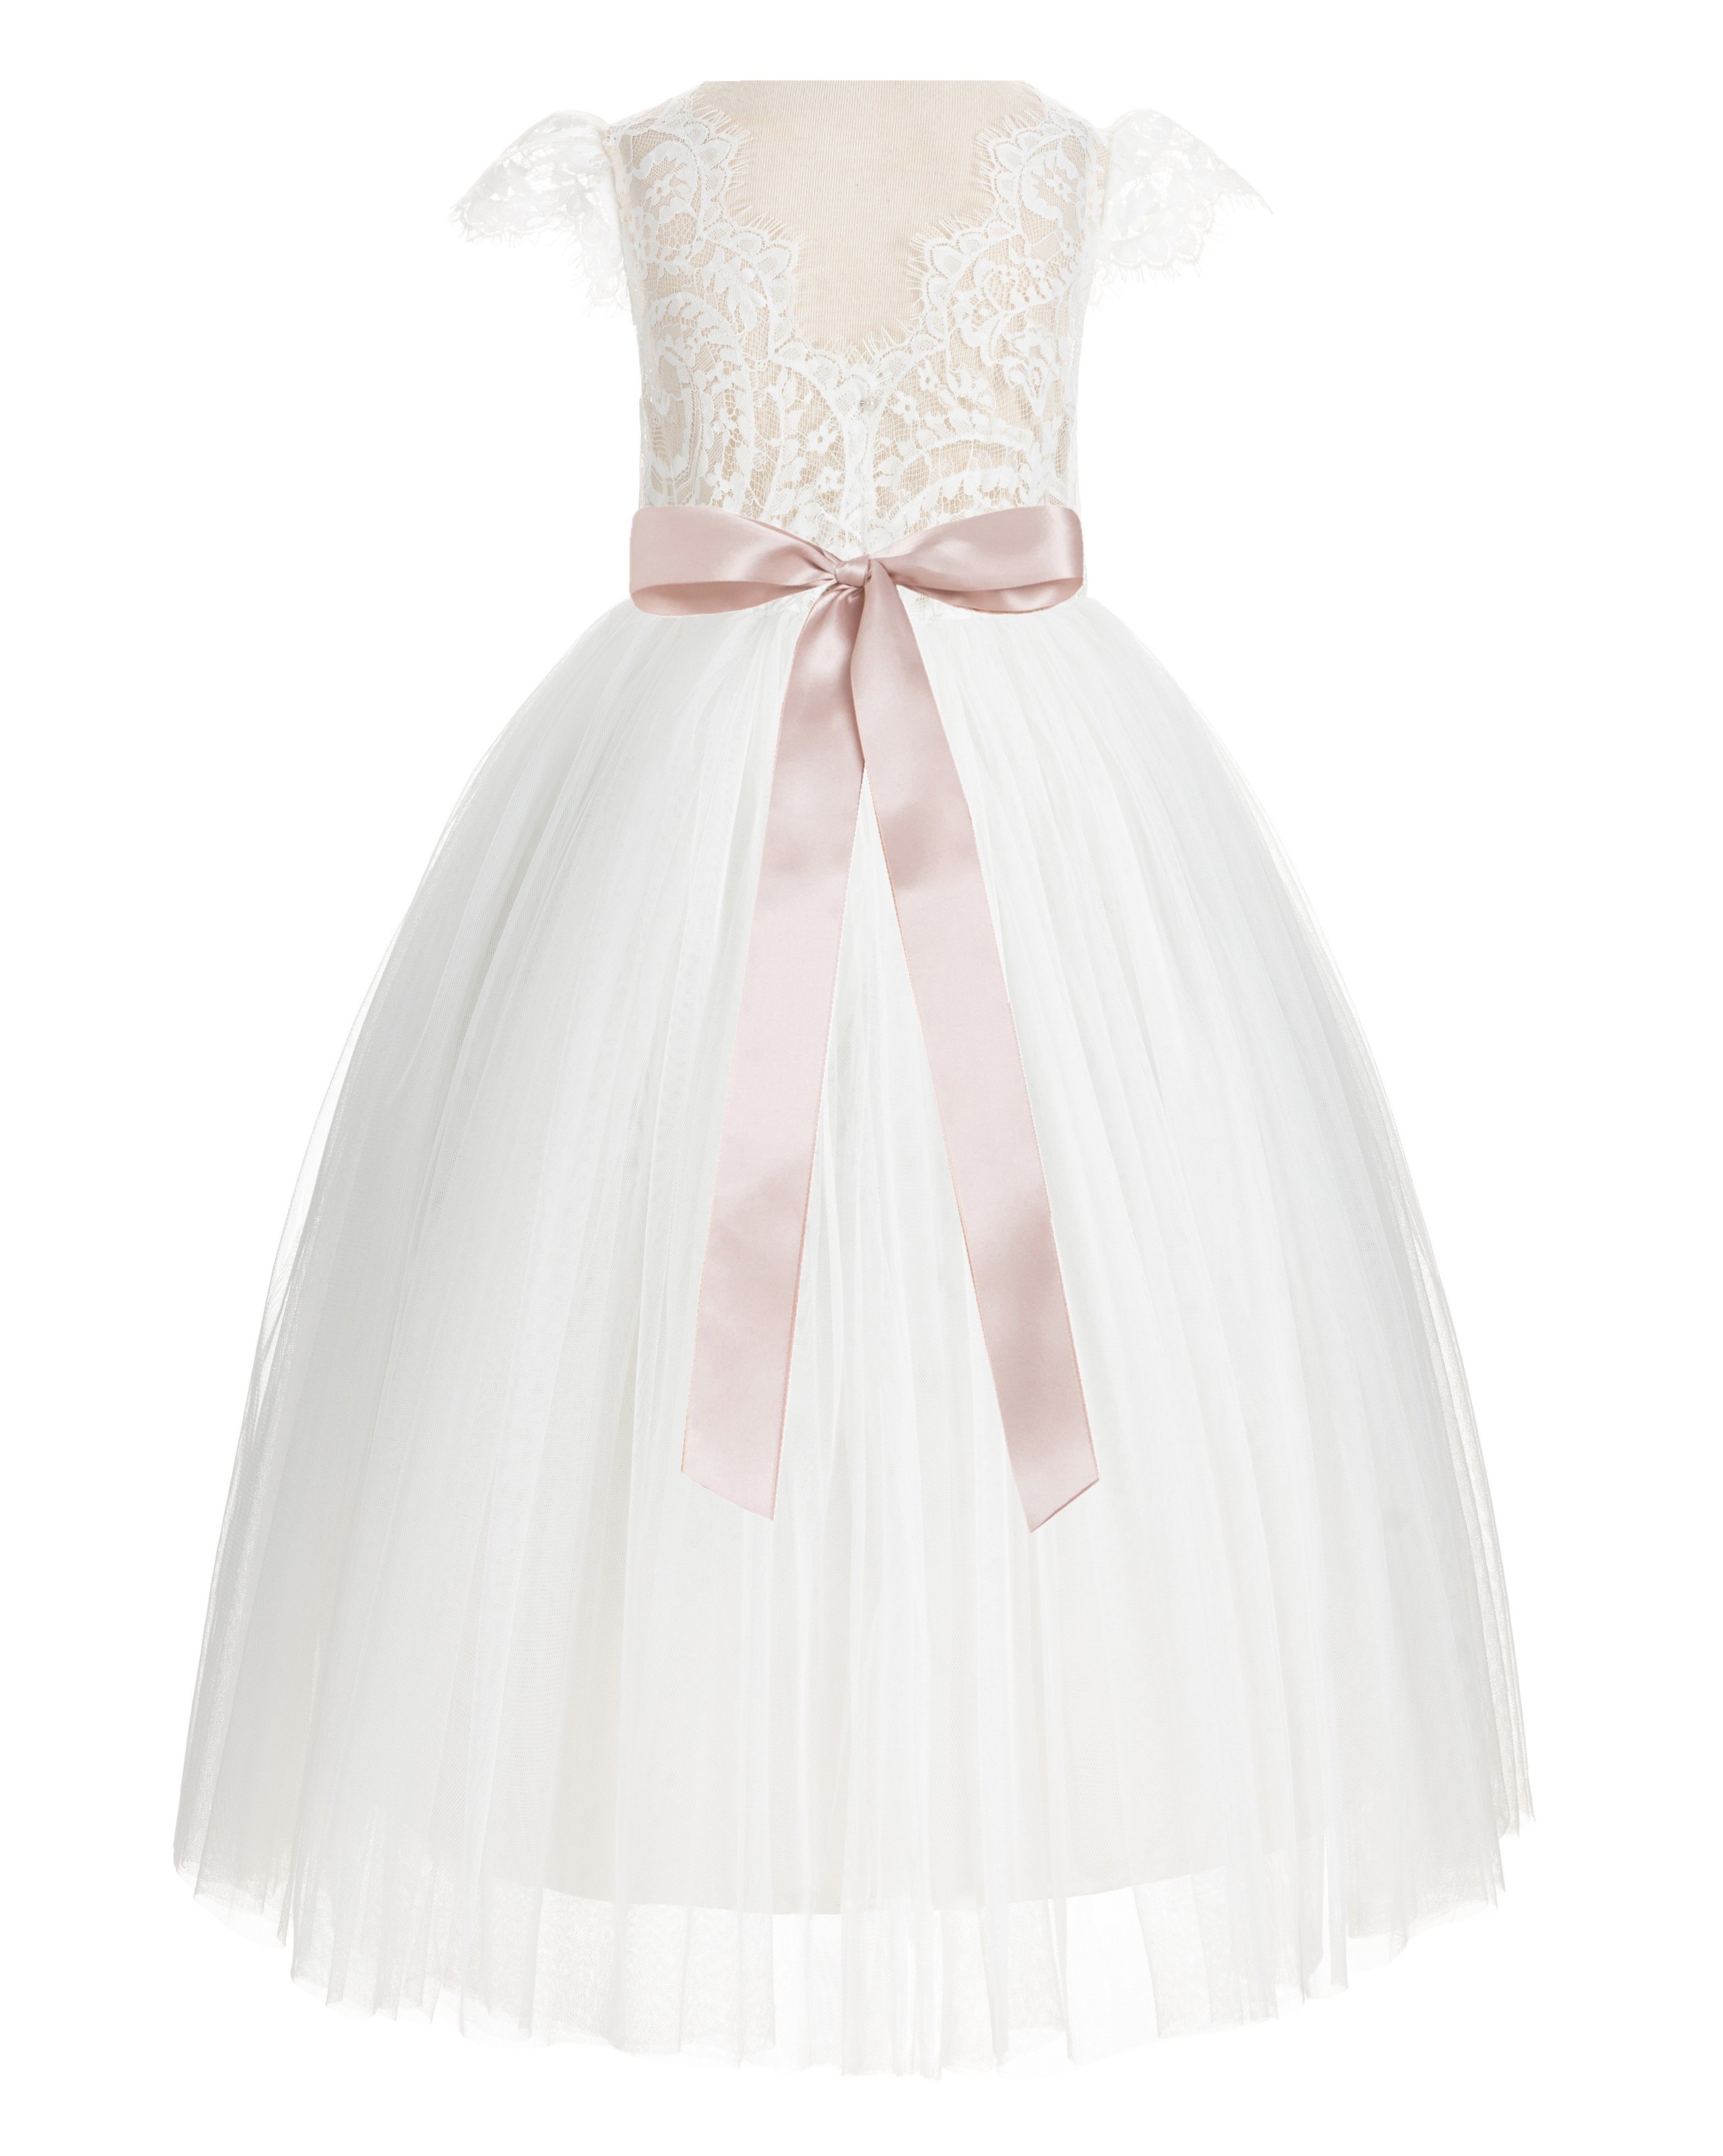 Ivory / Blush Pink Cap Sleeves Lace Flower Girl Dress V-Back Lace Dress 622R3